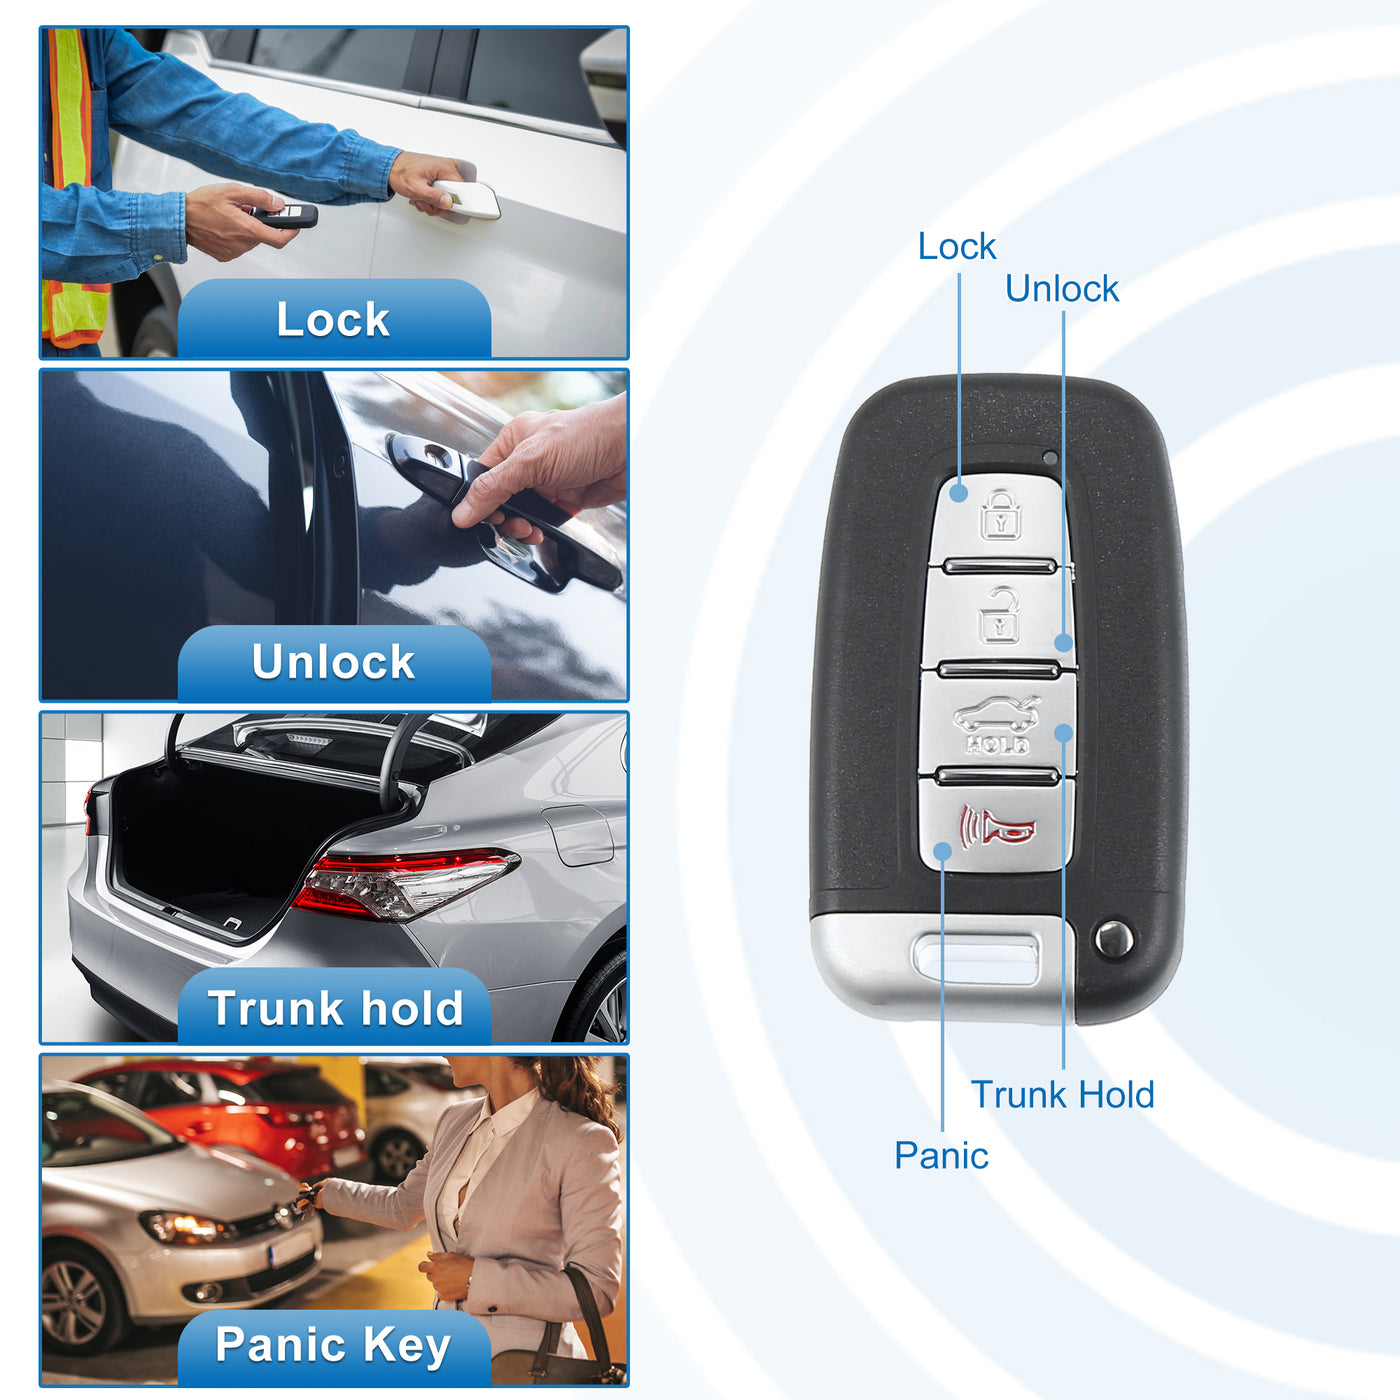 X AUTOHAUX 4 Button Car Keyless Entry Remote Control Key Fob Proximity Smart Fob SY5HMFNA04 for Hyundai Veloster 2012-2017 315MHz